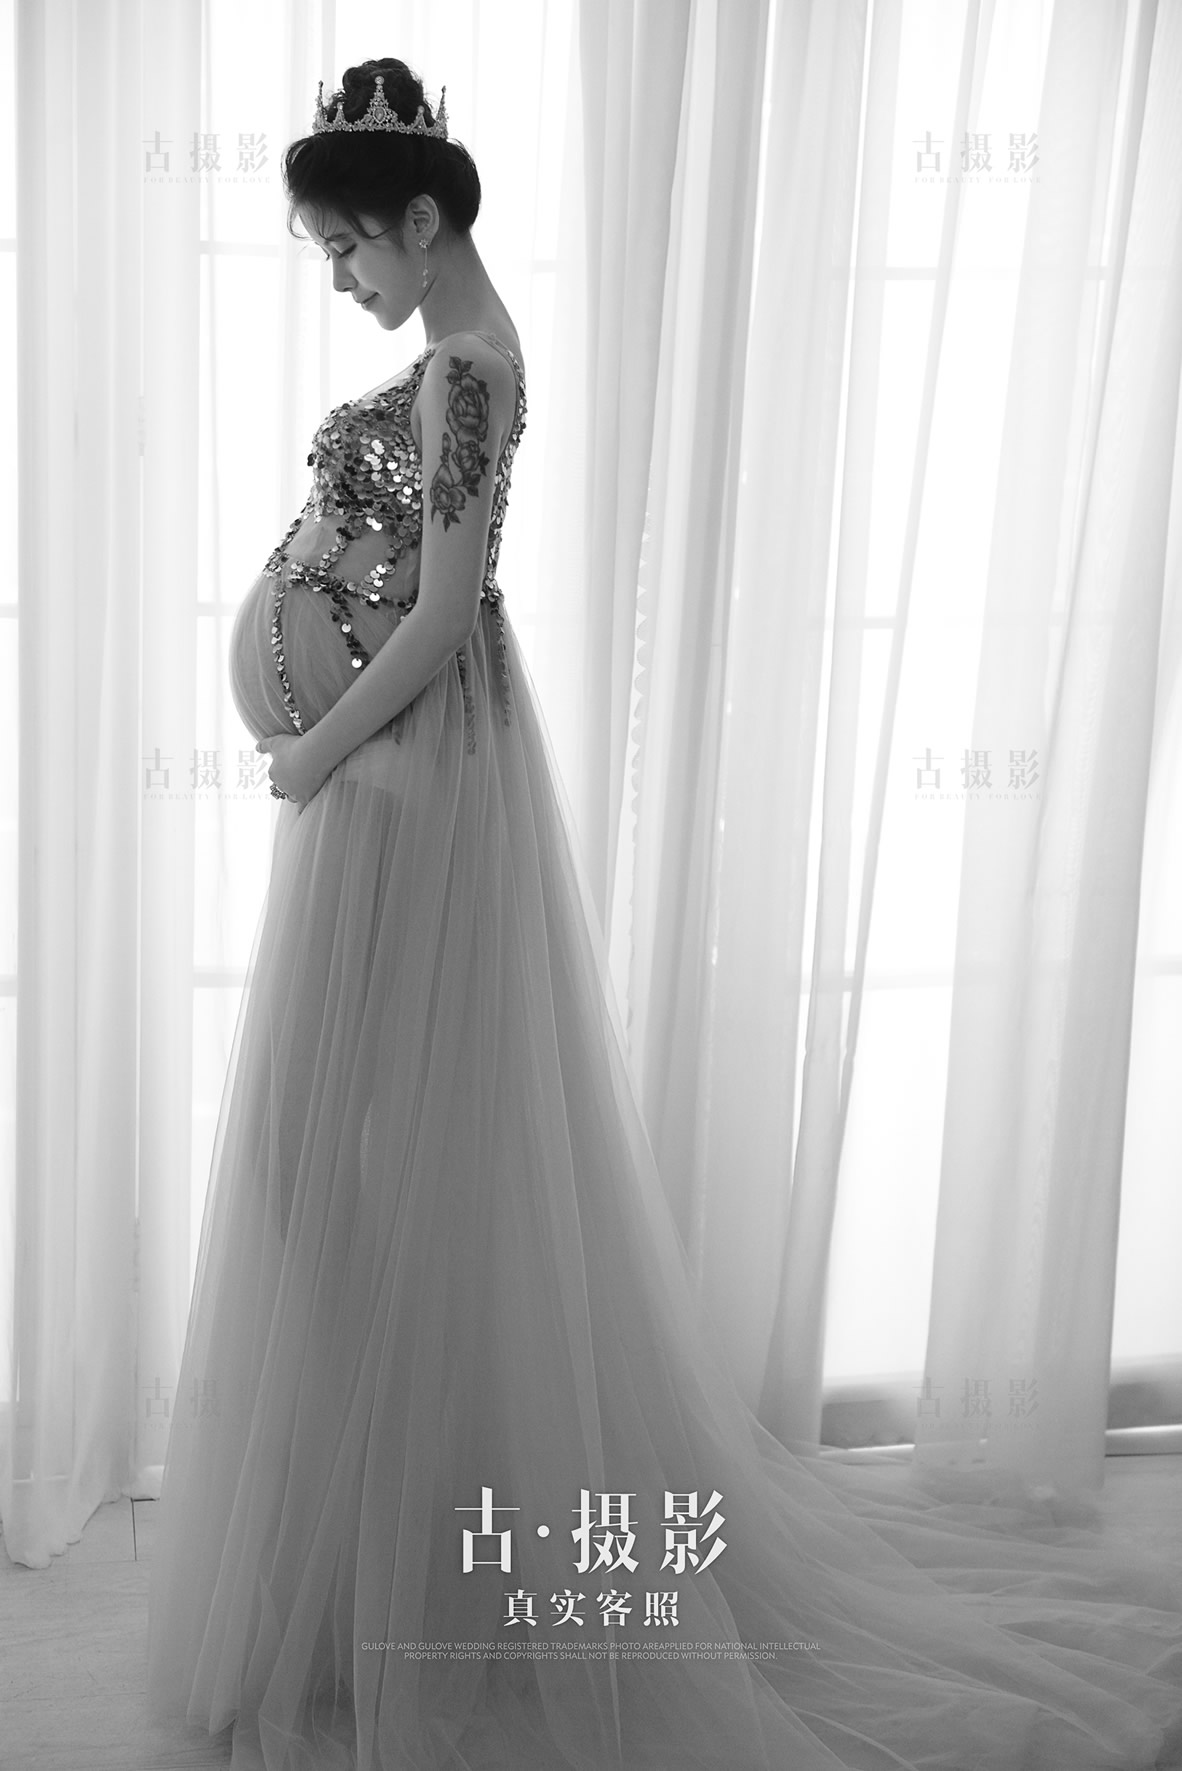 孕 妈 妈 Maternity - F Studio | 极致婚礼影像